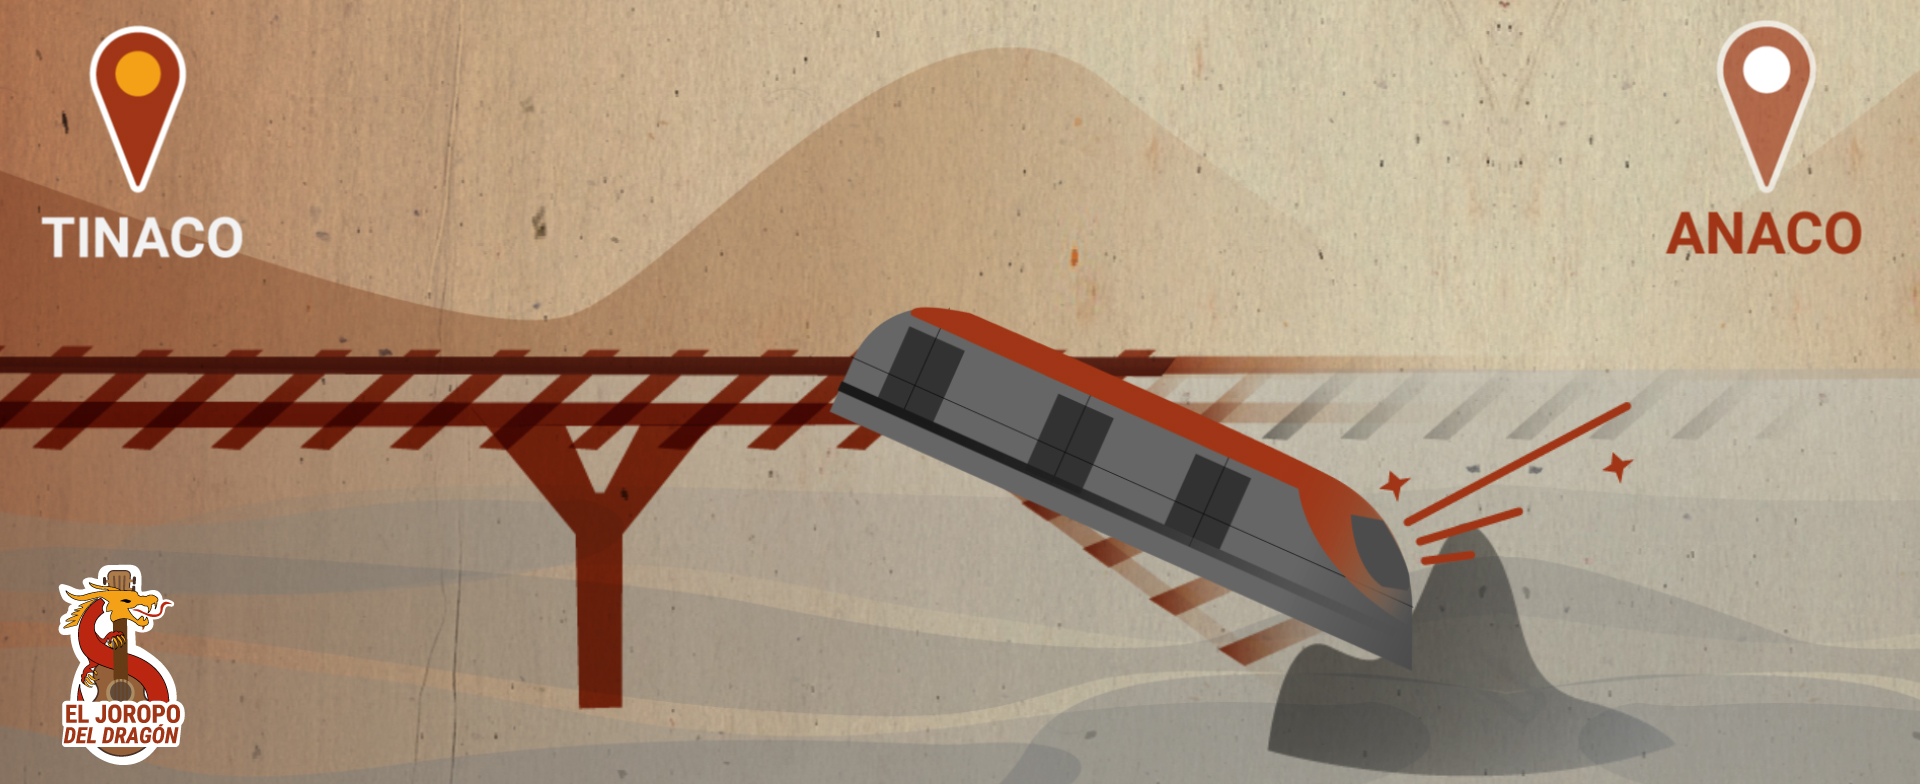 illustration showing a train derailment